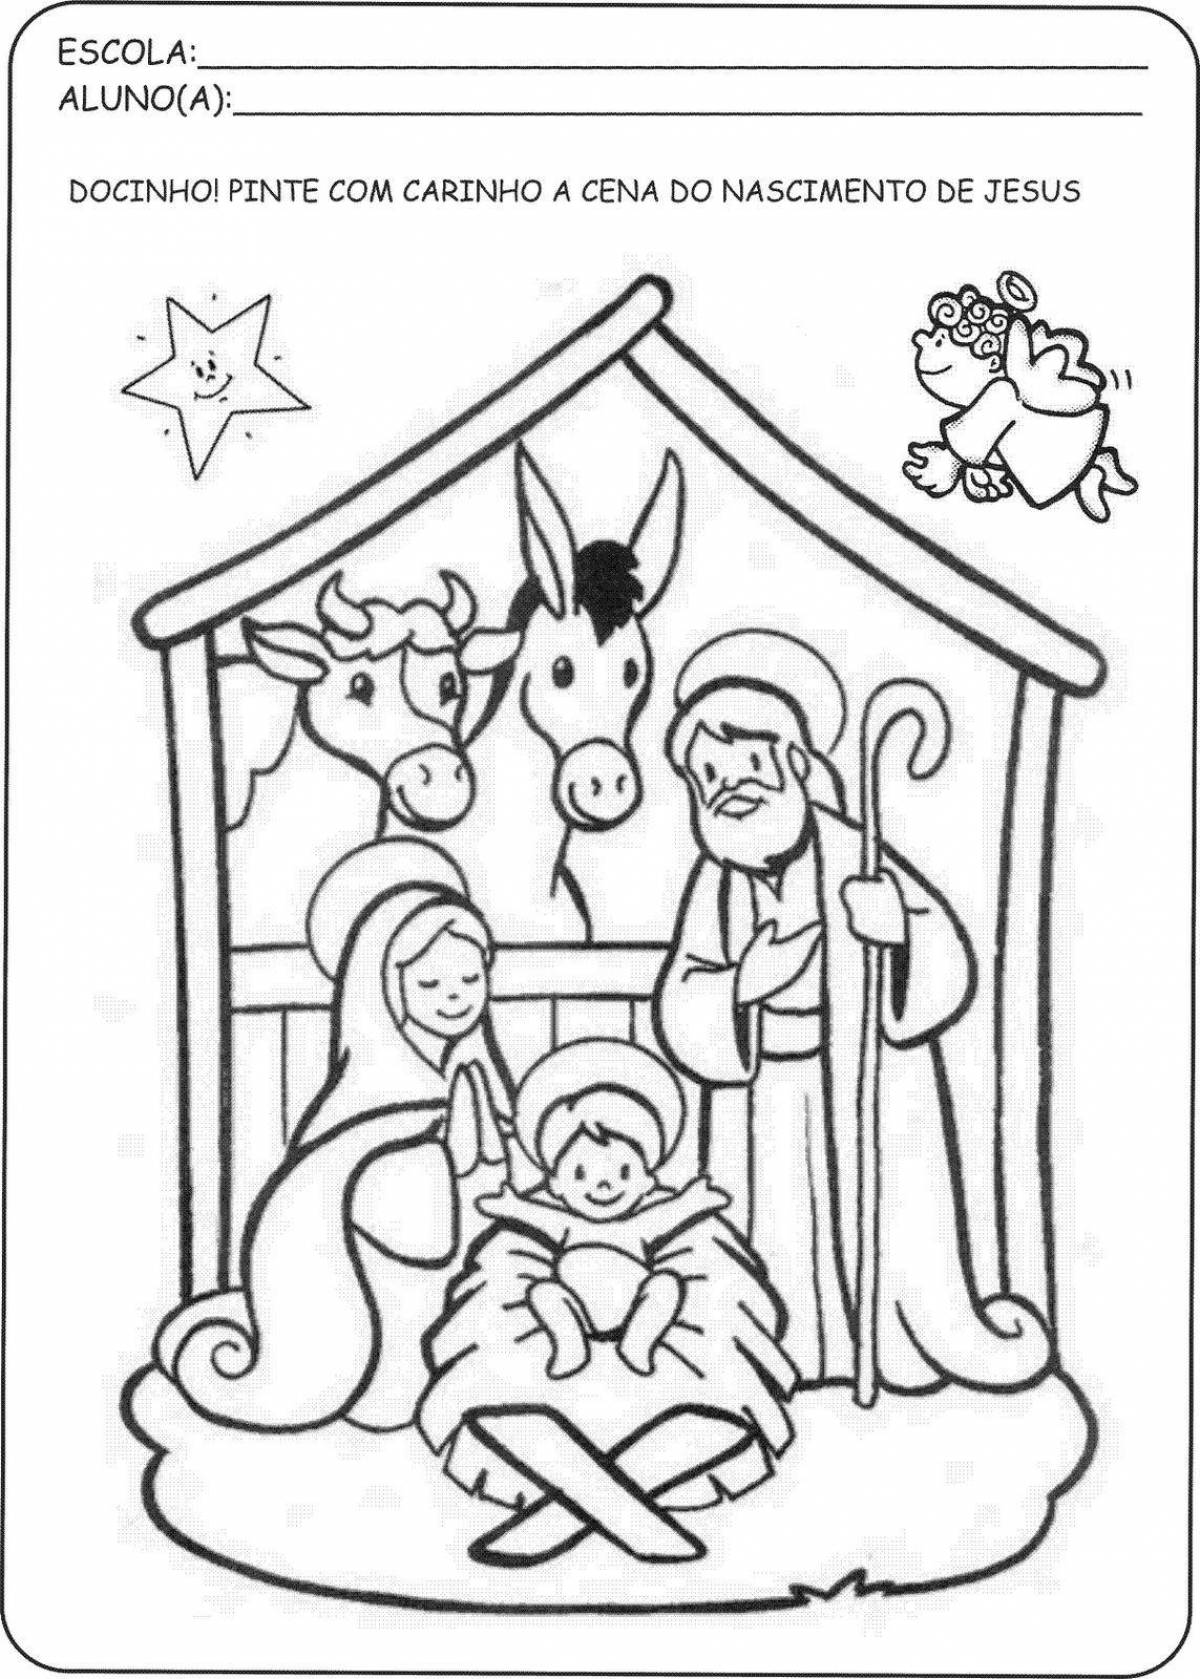 Exquisite nativity scene coloring book